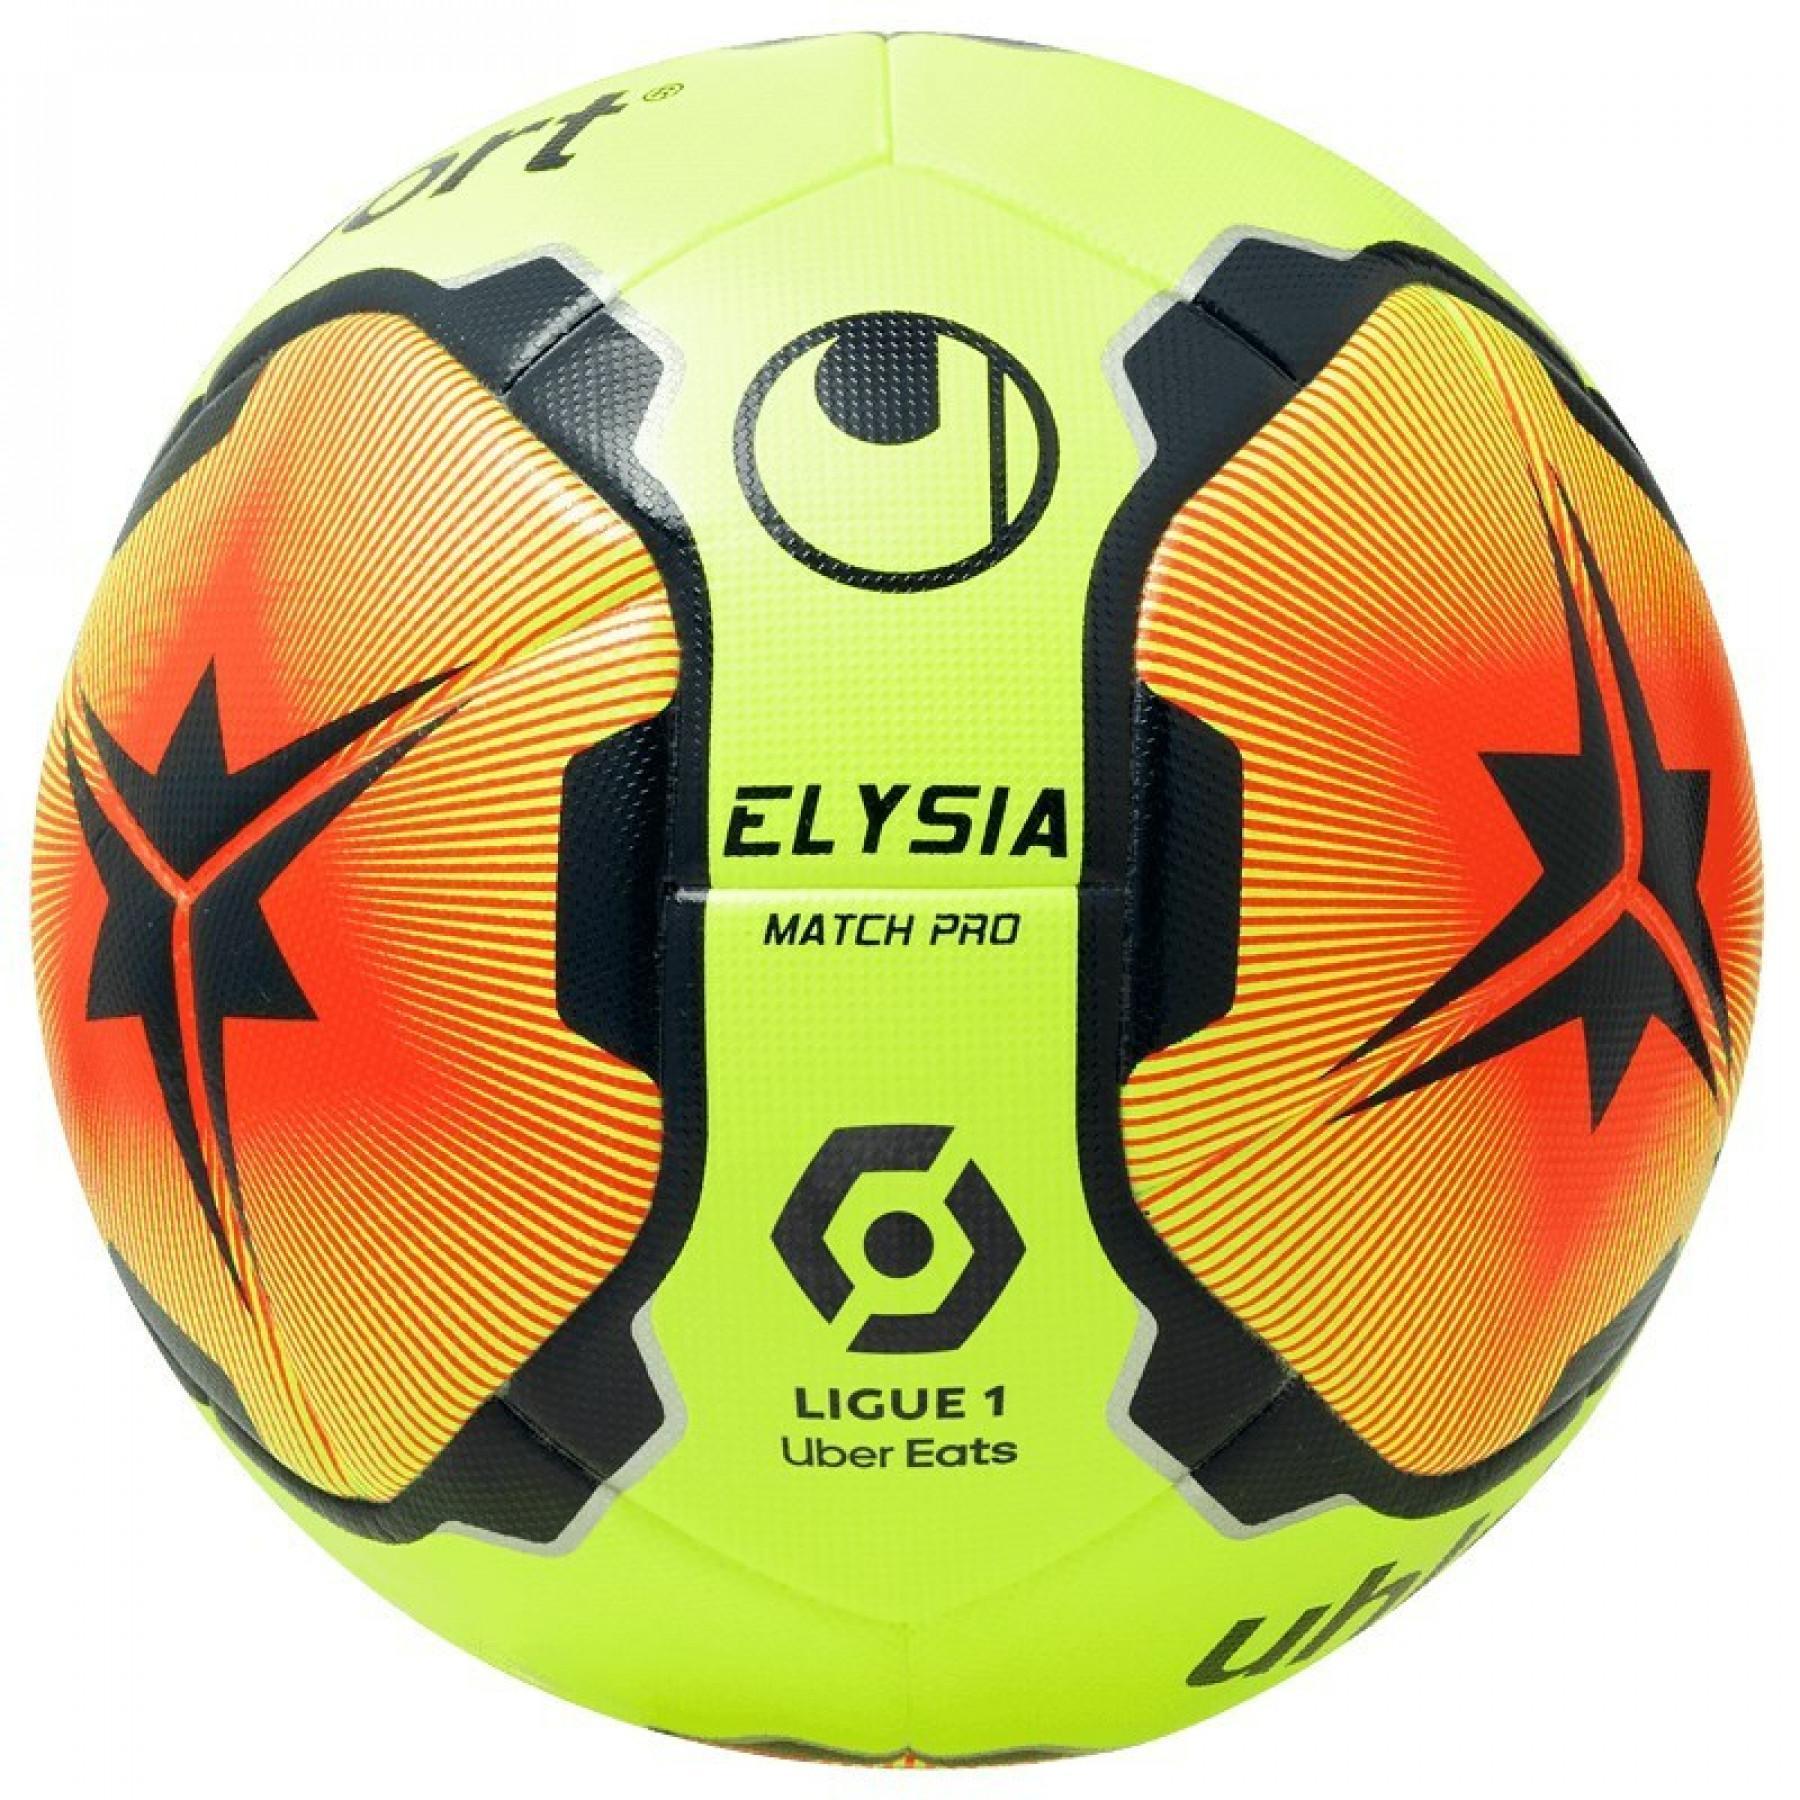 Ballon Uhlsport Elysia match pro